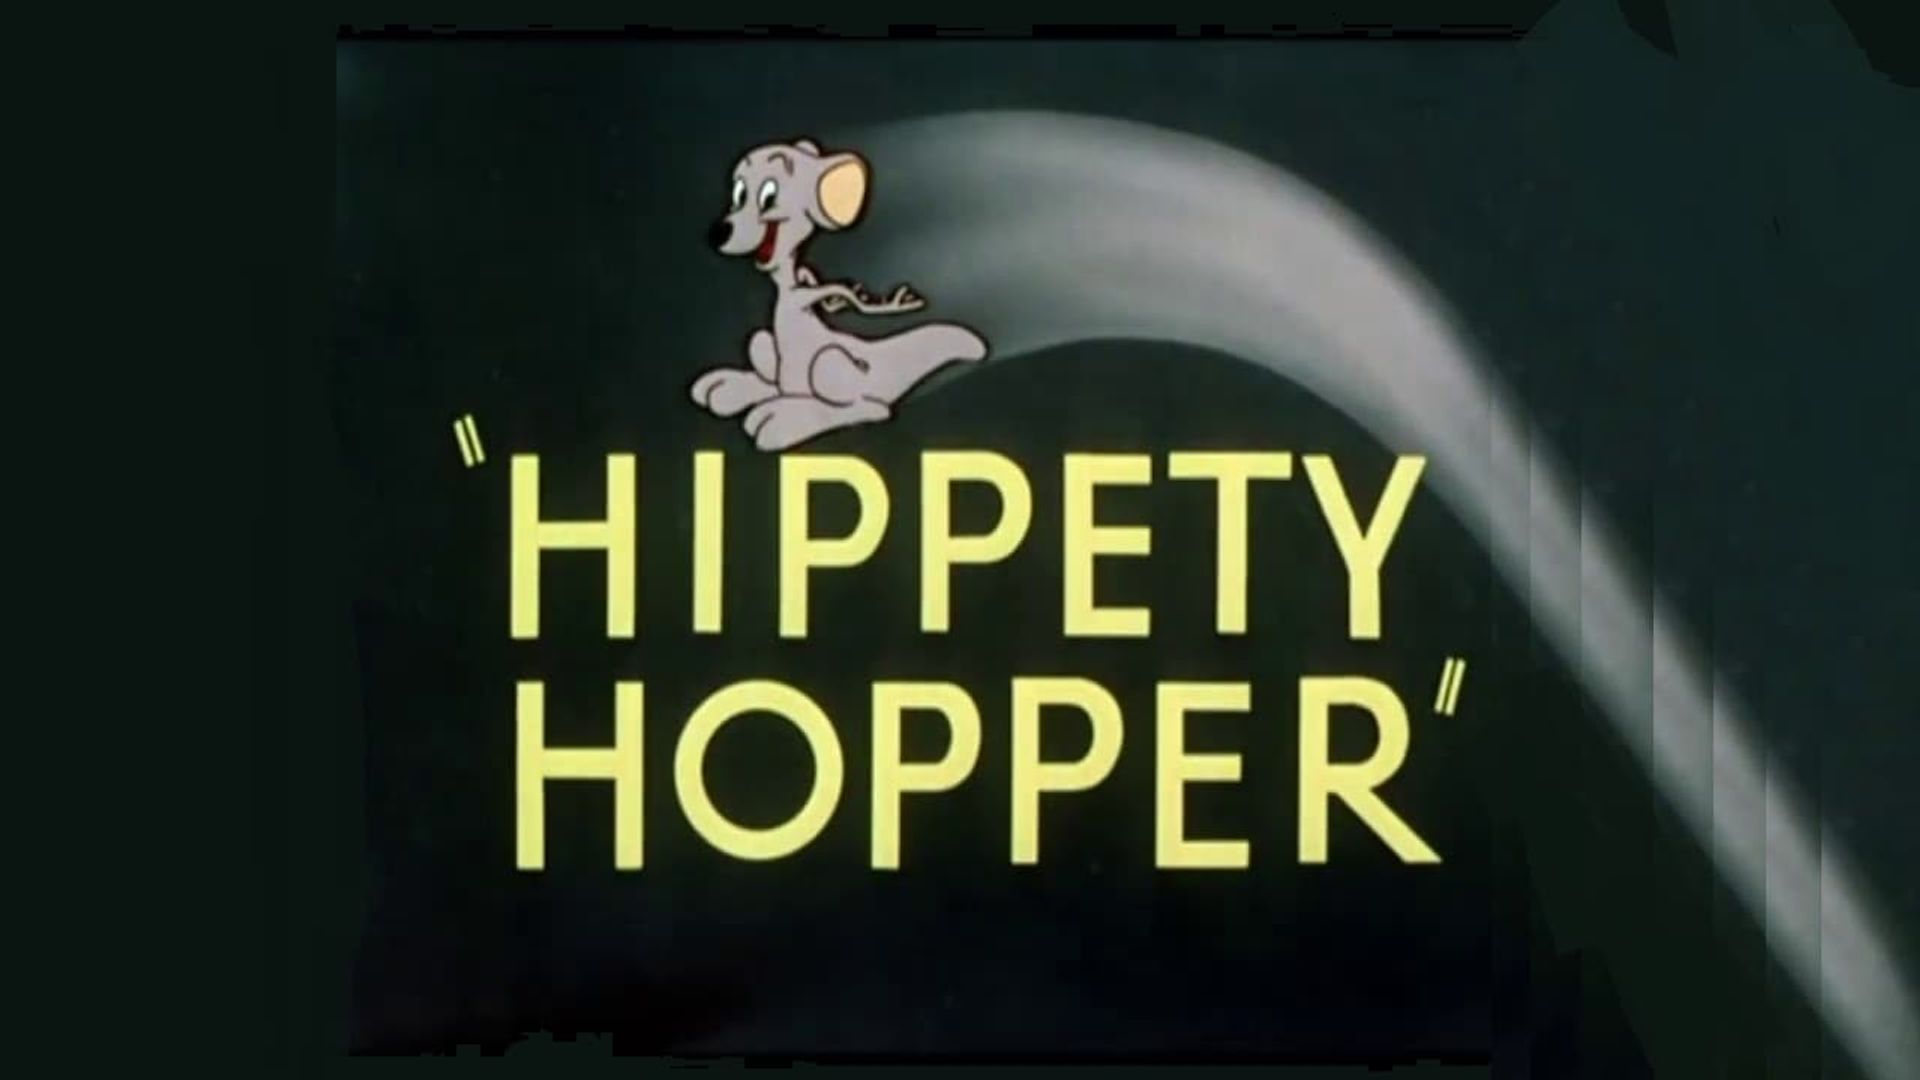 Hippety Hopper background